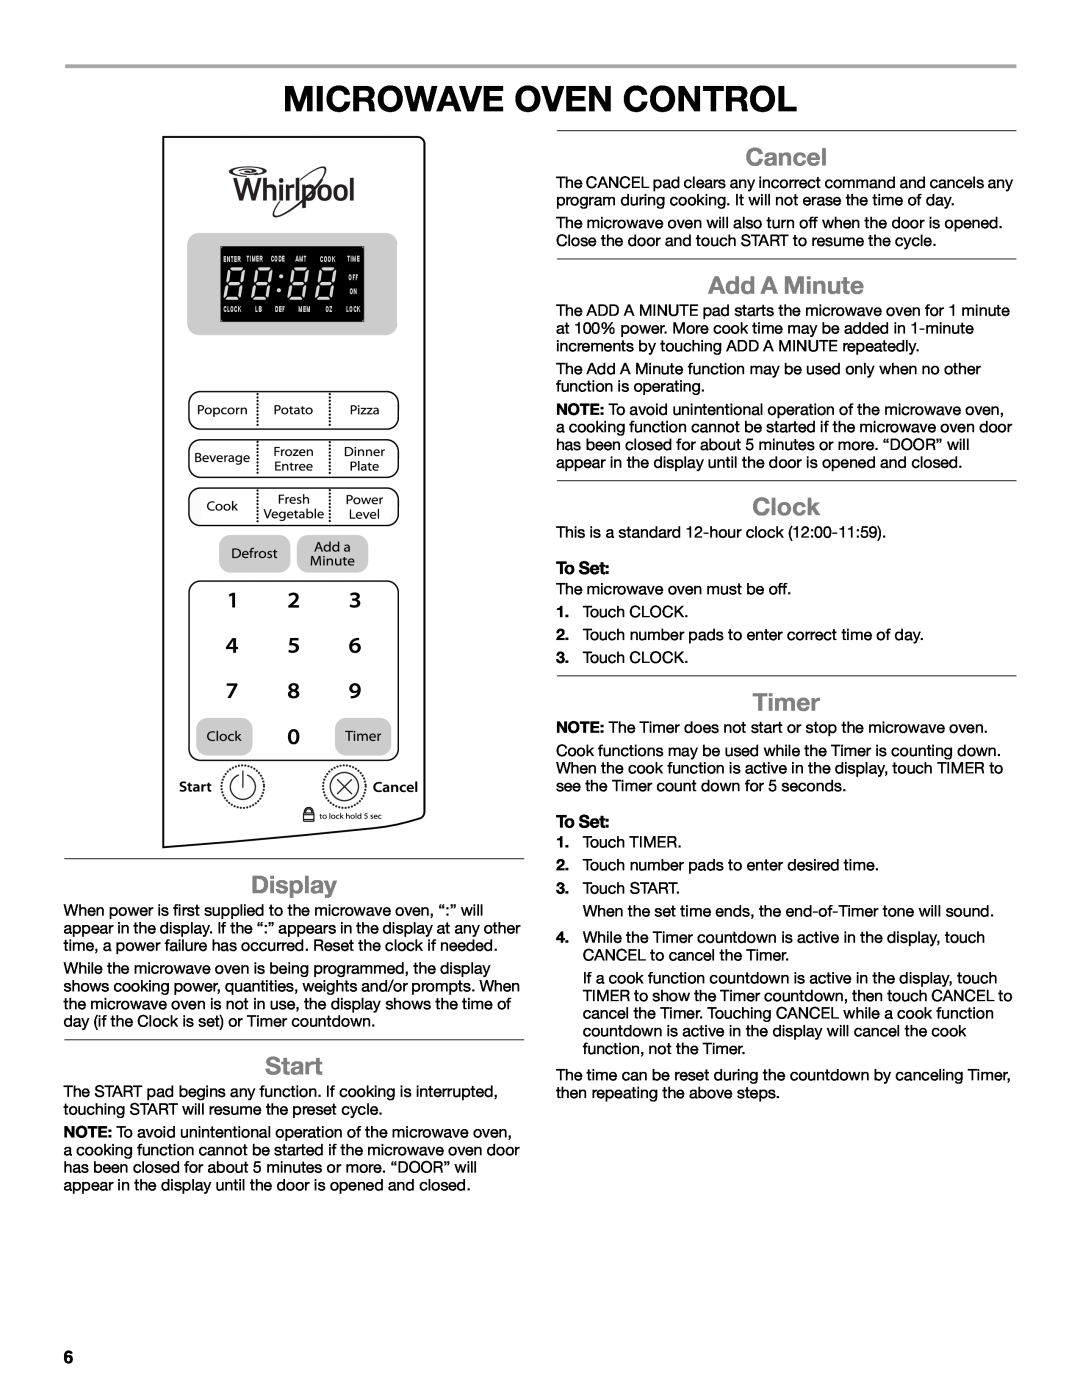 Whirlpool WMC10007 manual Microwave Oven Control, Cancel, Add A Minute, Clock, Timer, Display, Start 